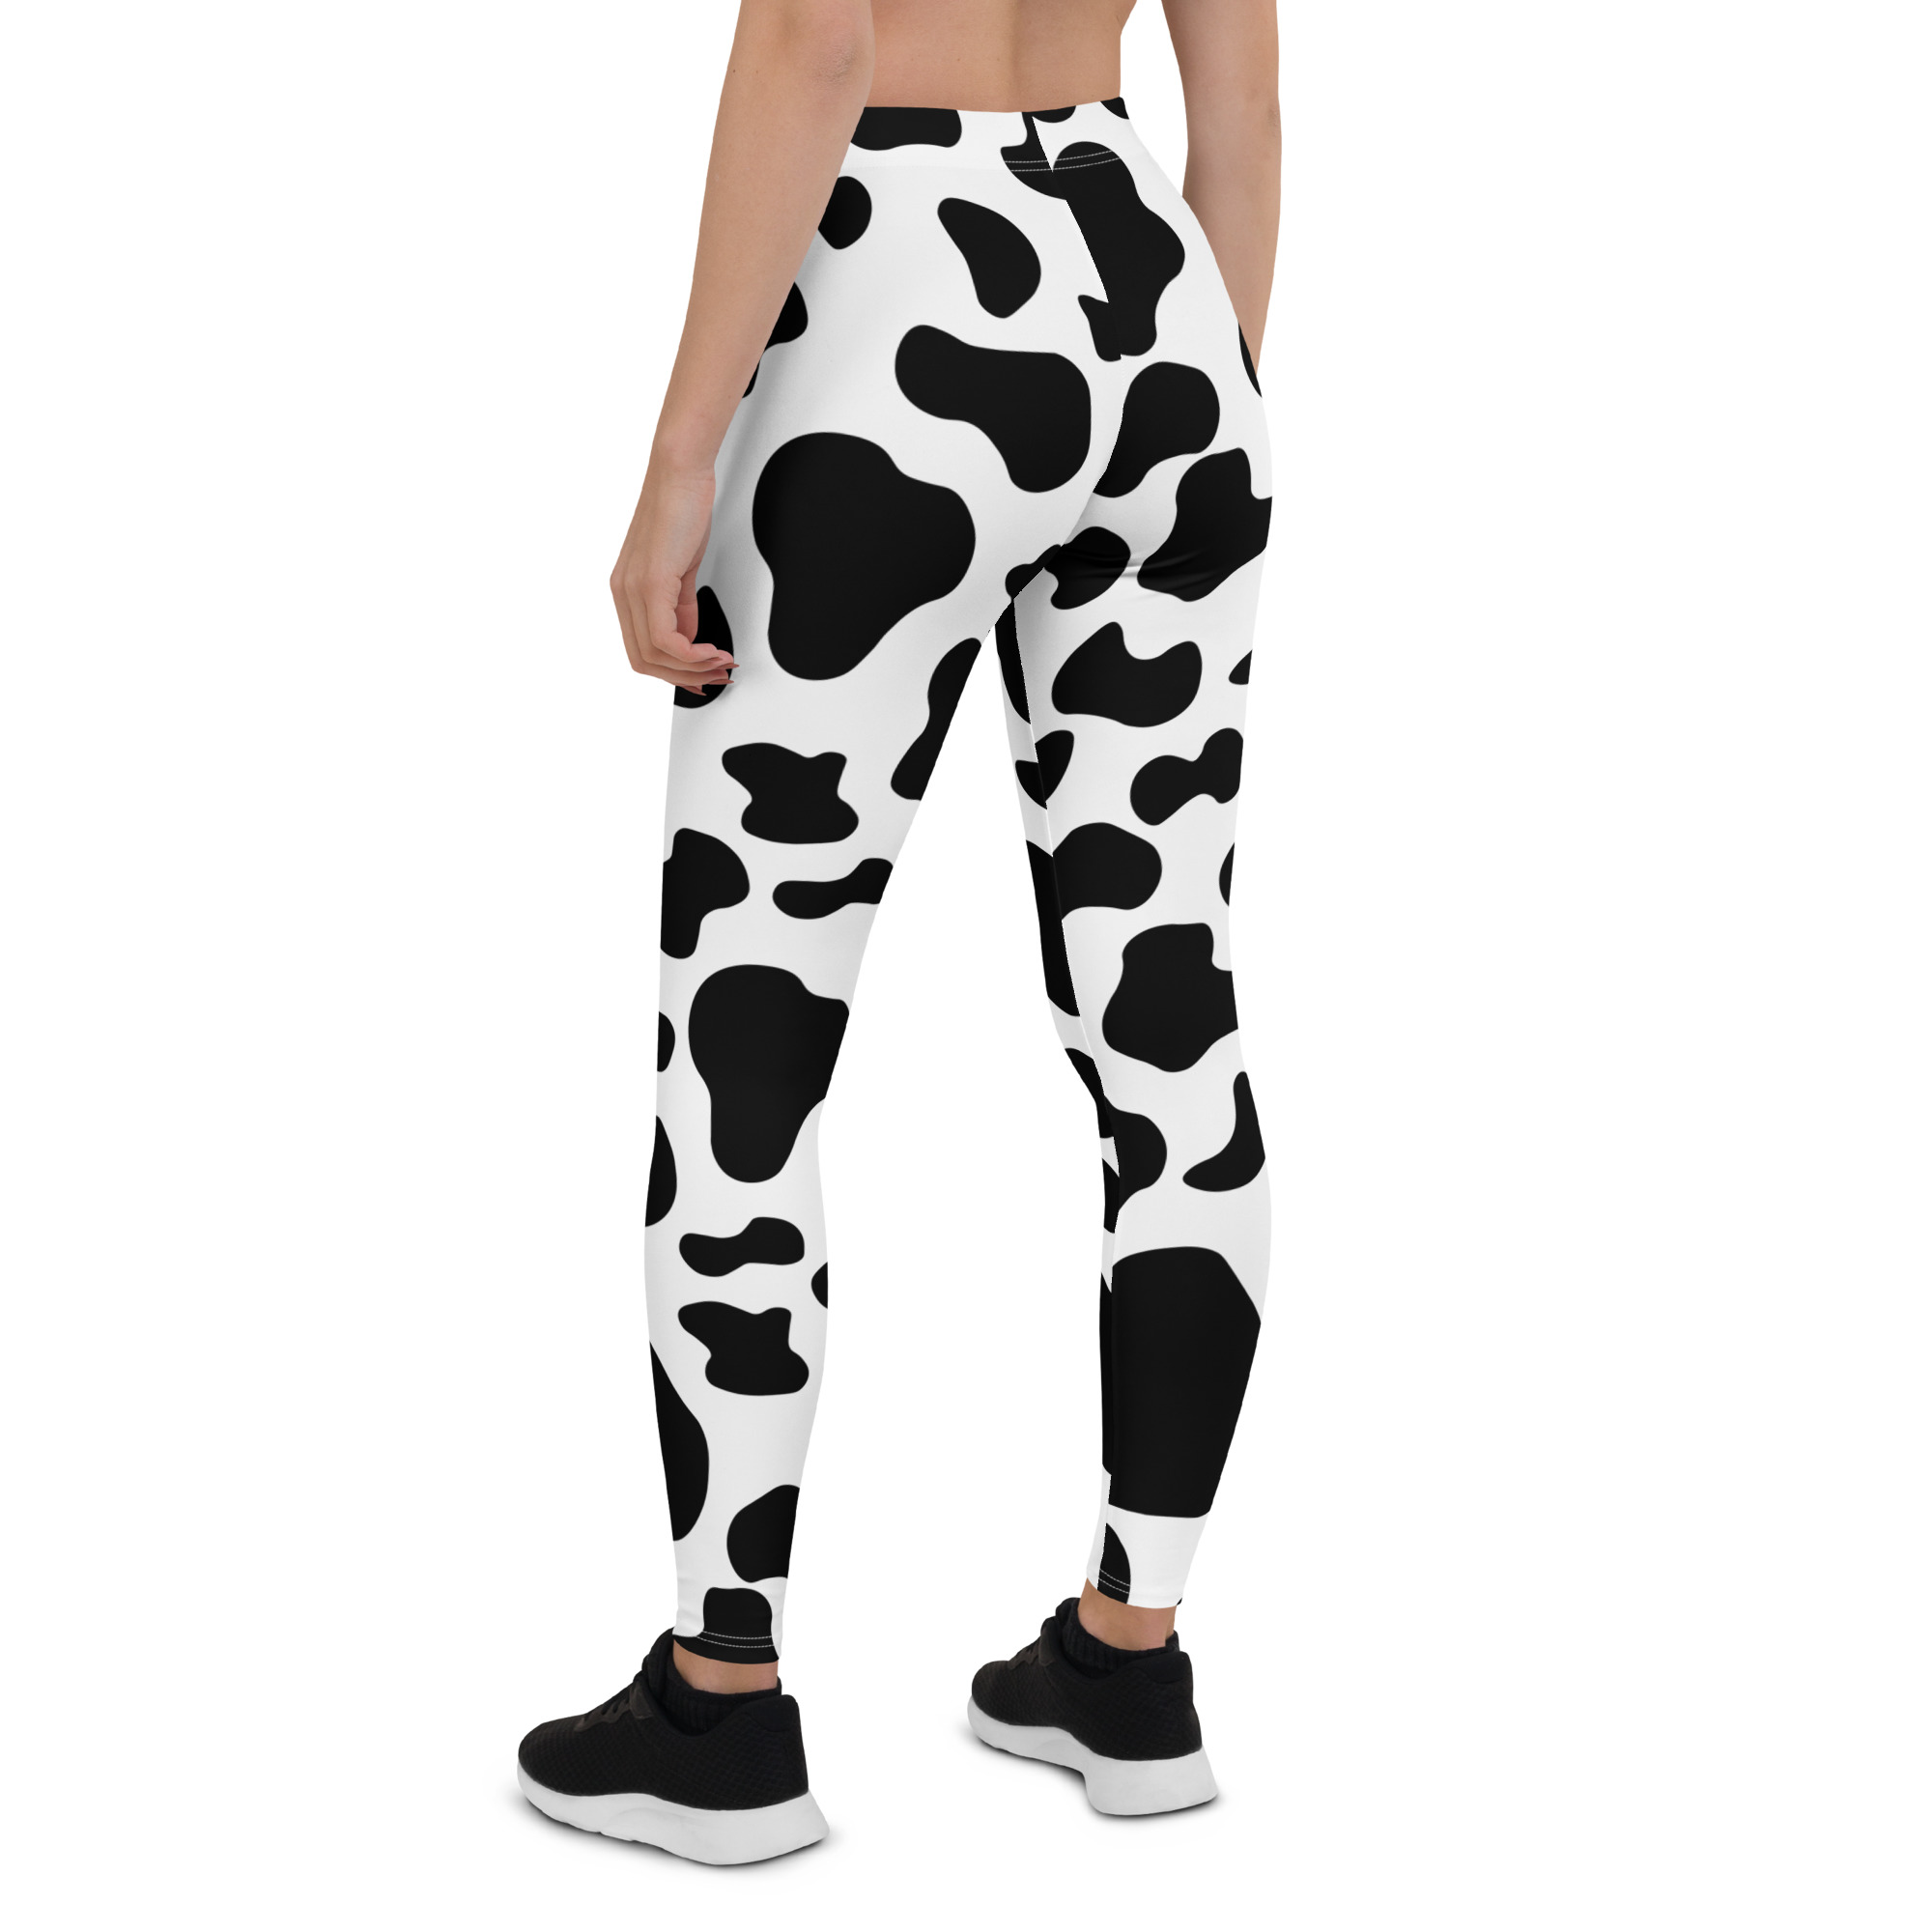 Leggings - Cow Print wear